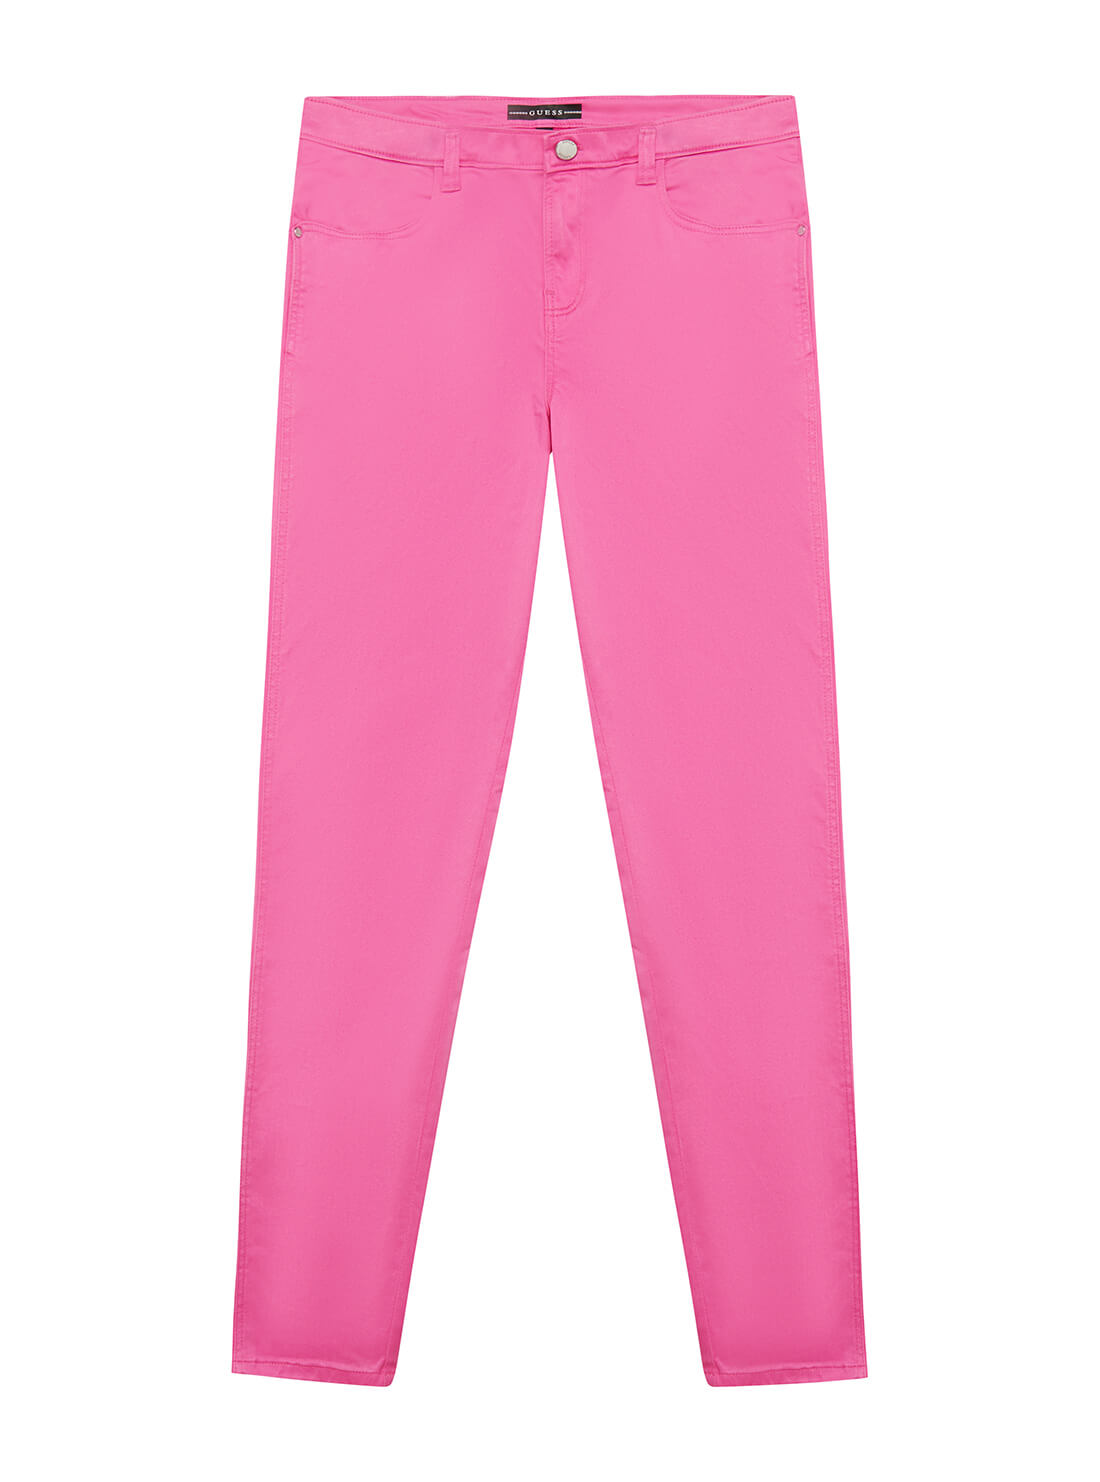 GUESS Big Girls Pink Stretch Pants (7-16) J1YB05WB7X0 Front View